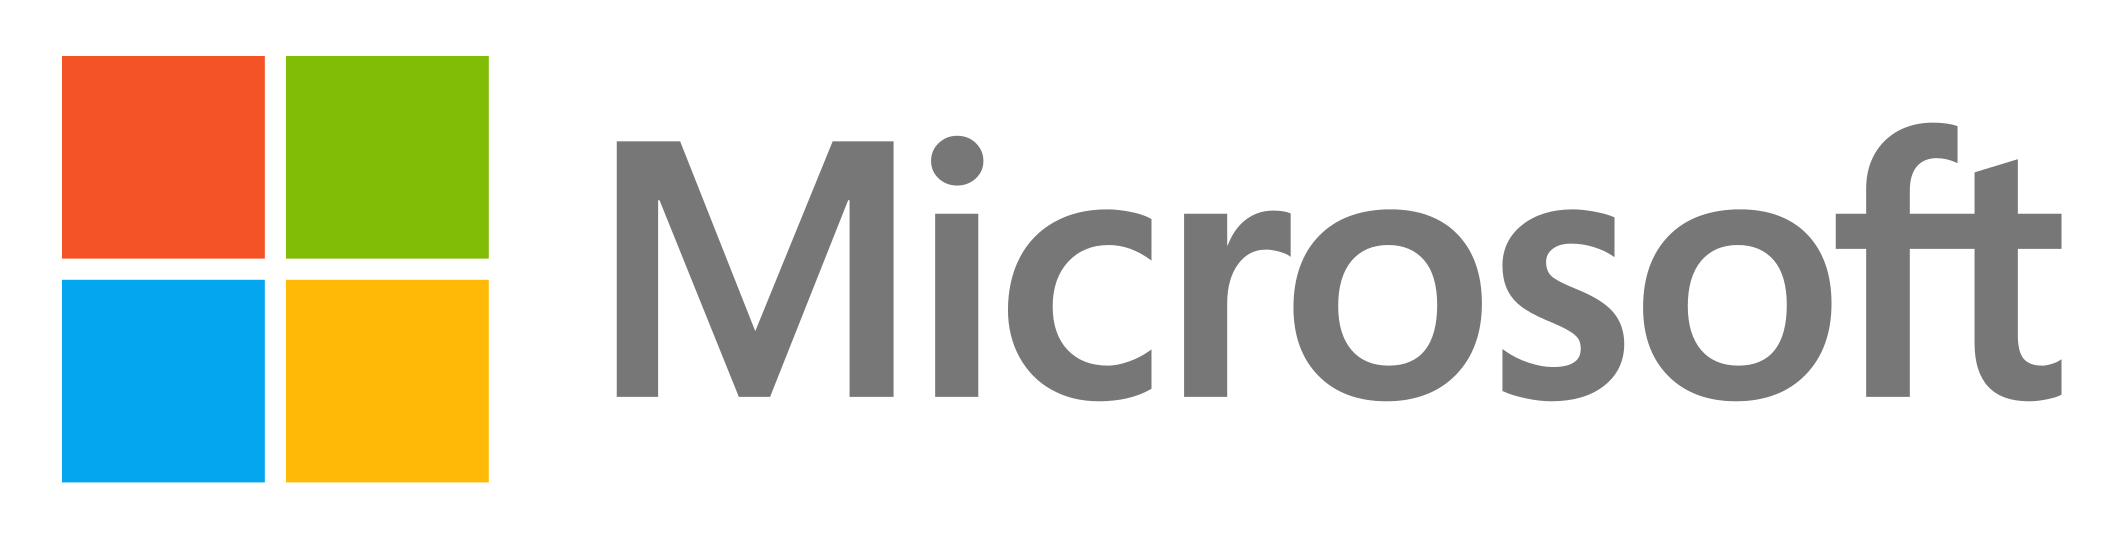 Microsoft transparent logo